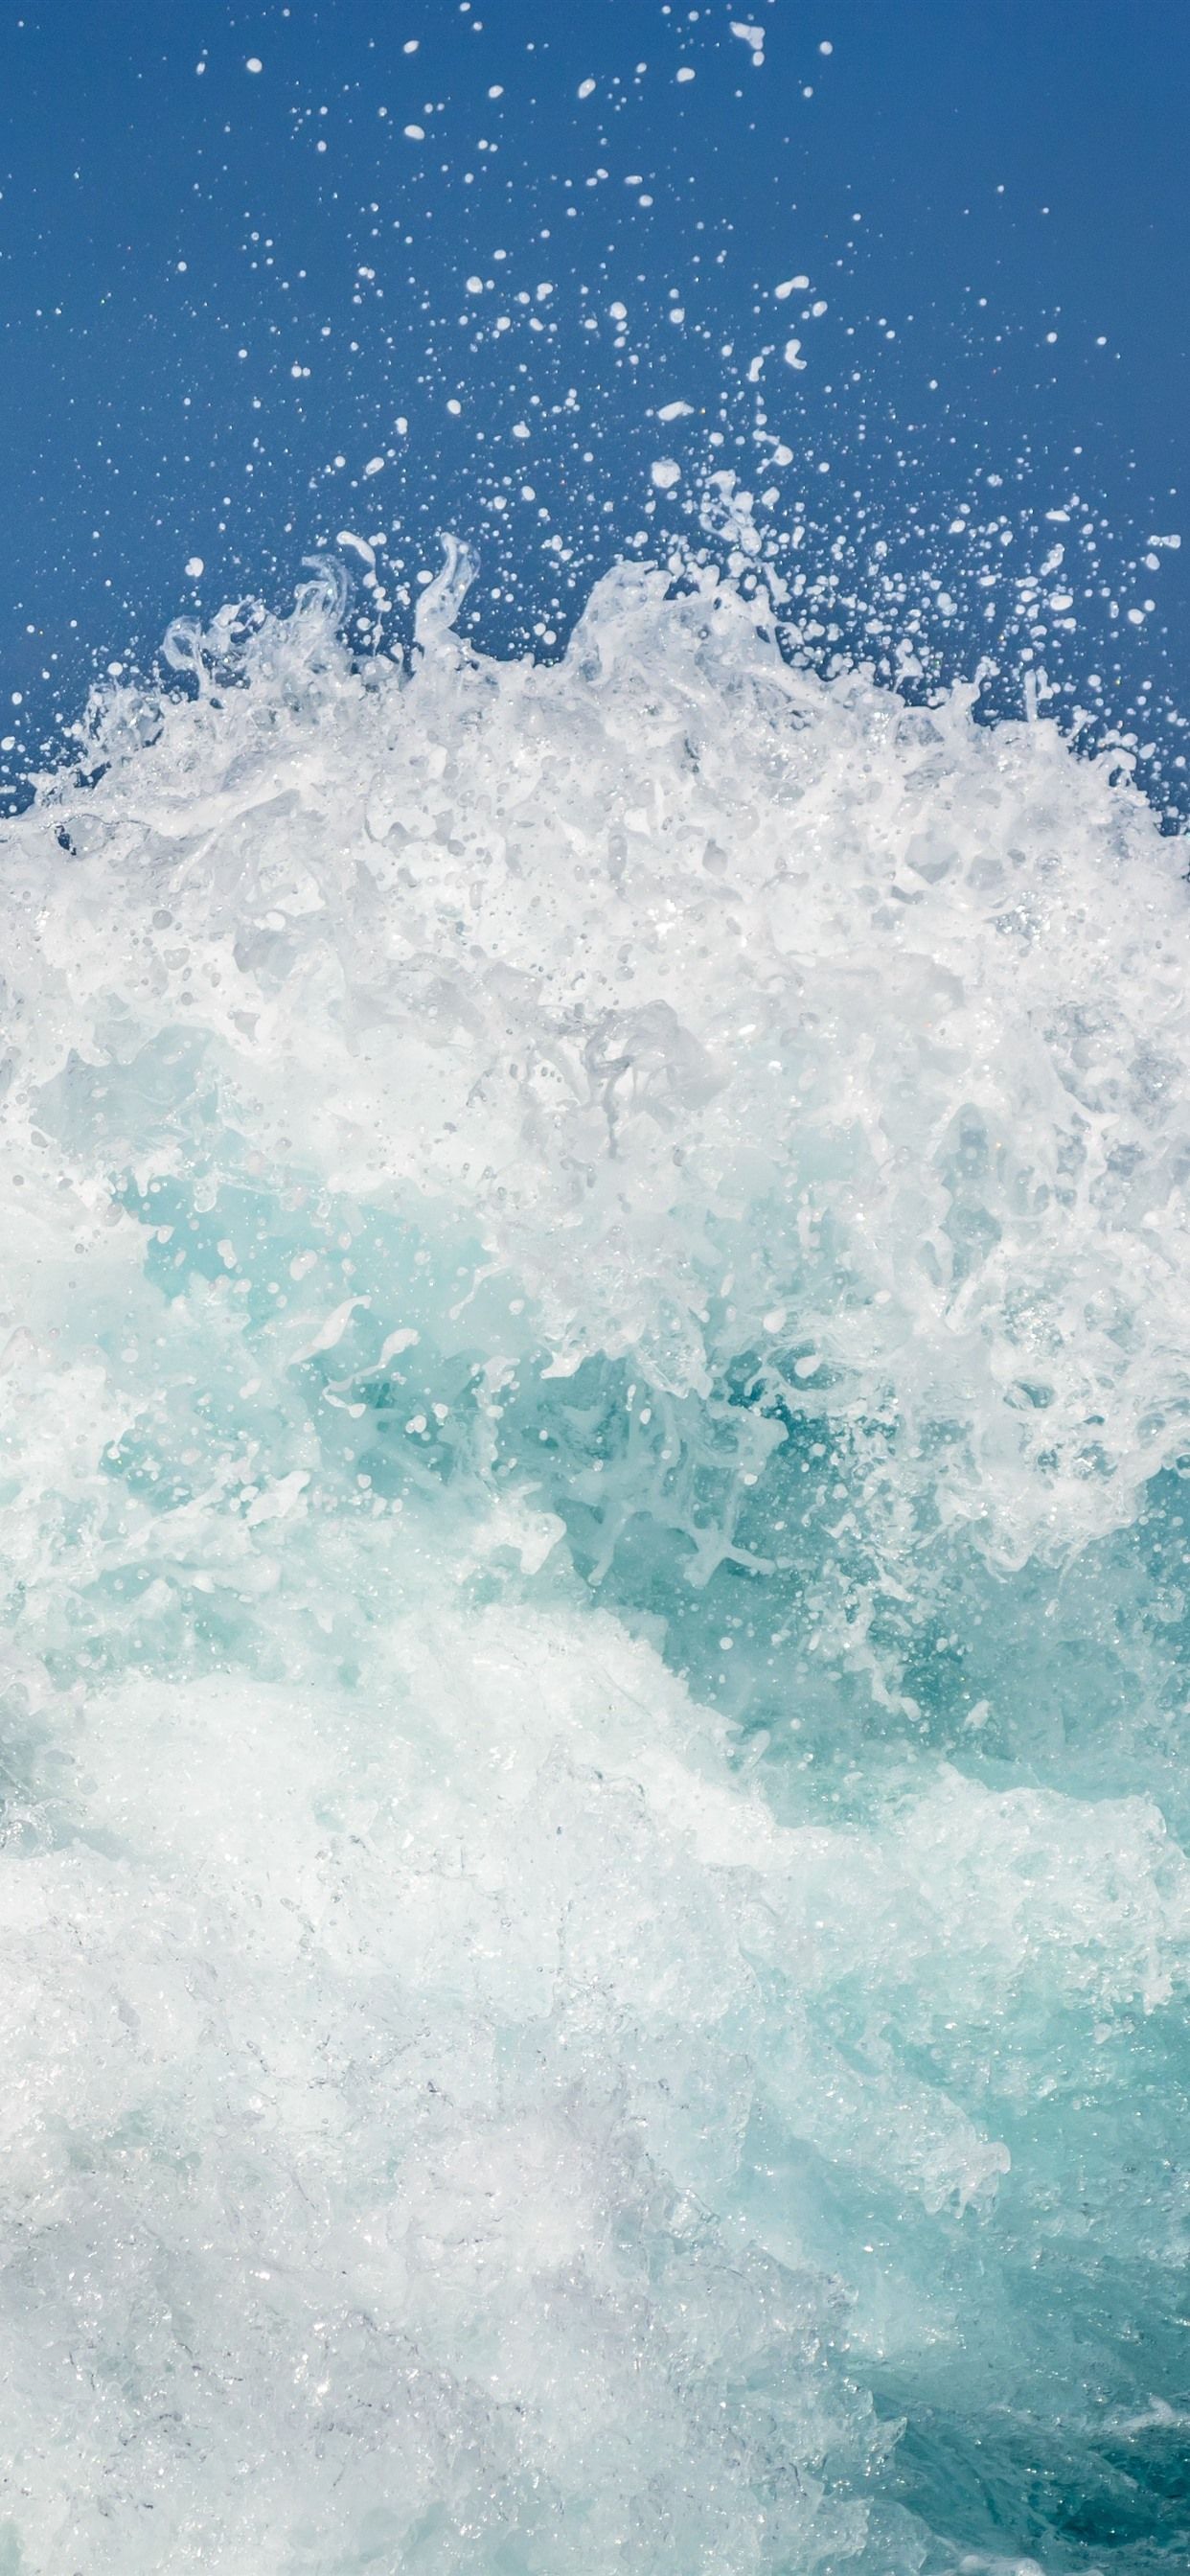 Wallpaper Sea, waves, water splash, water droplets 5120x2880 UHD 5K Picture, Image